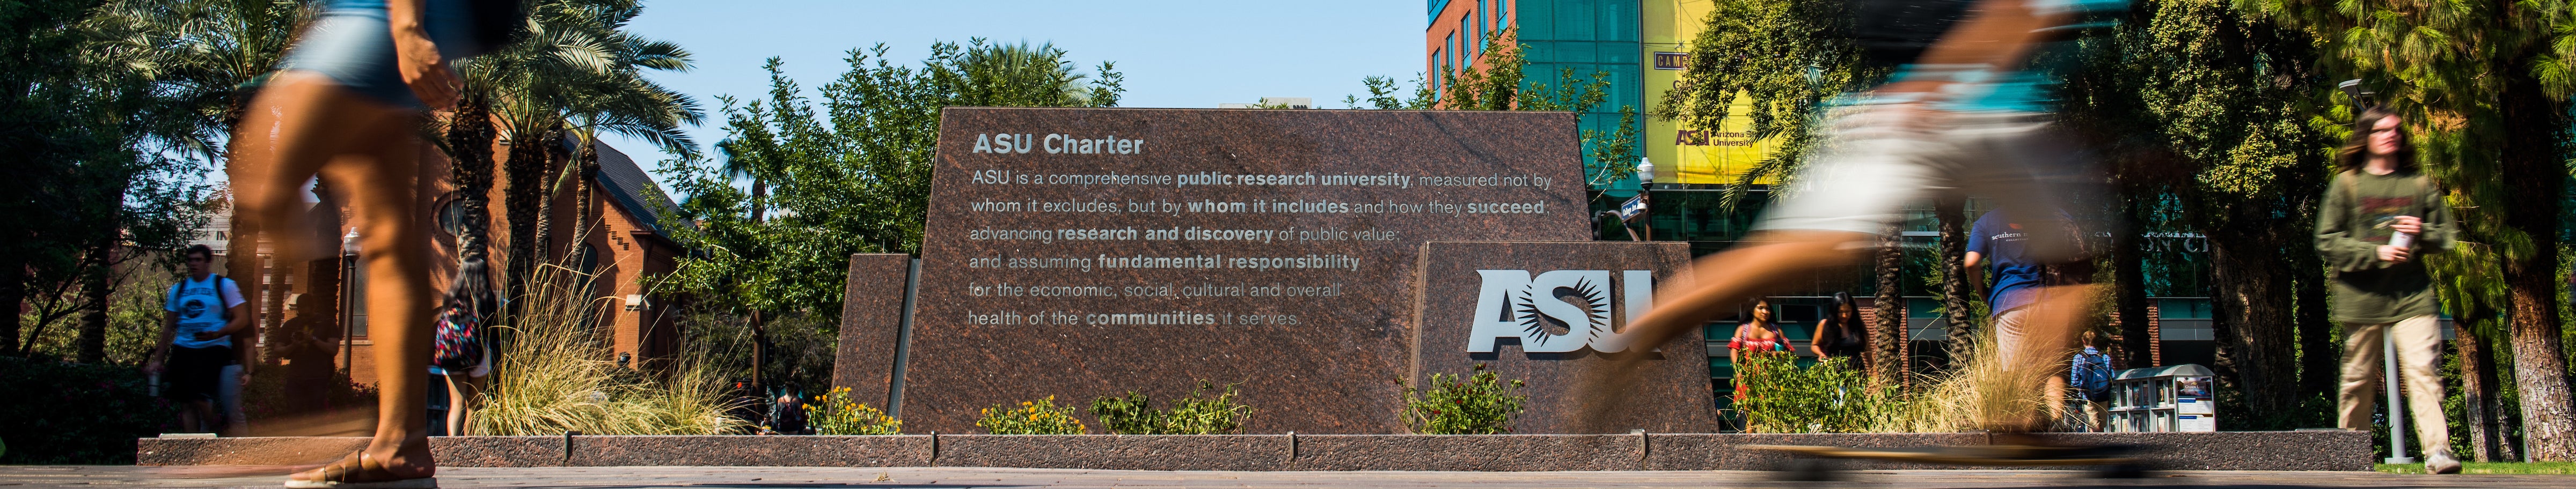 ASU Charter Signage